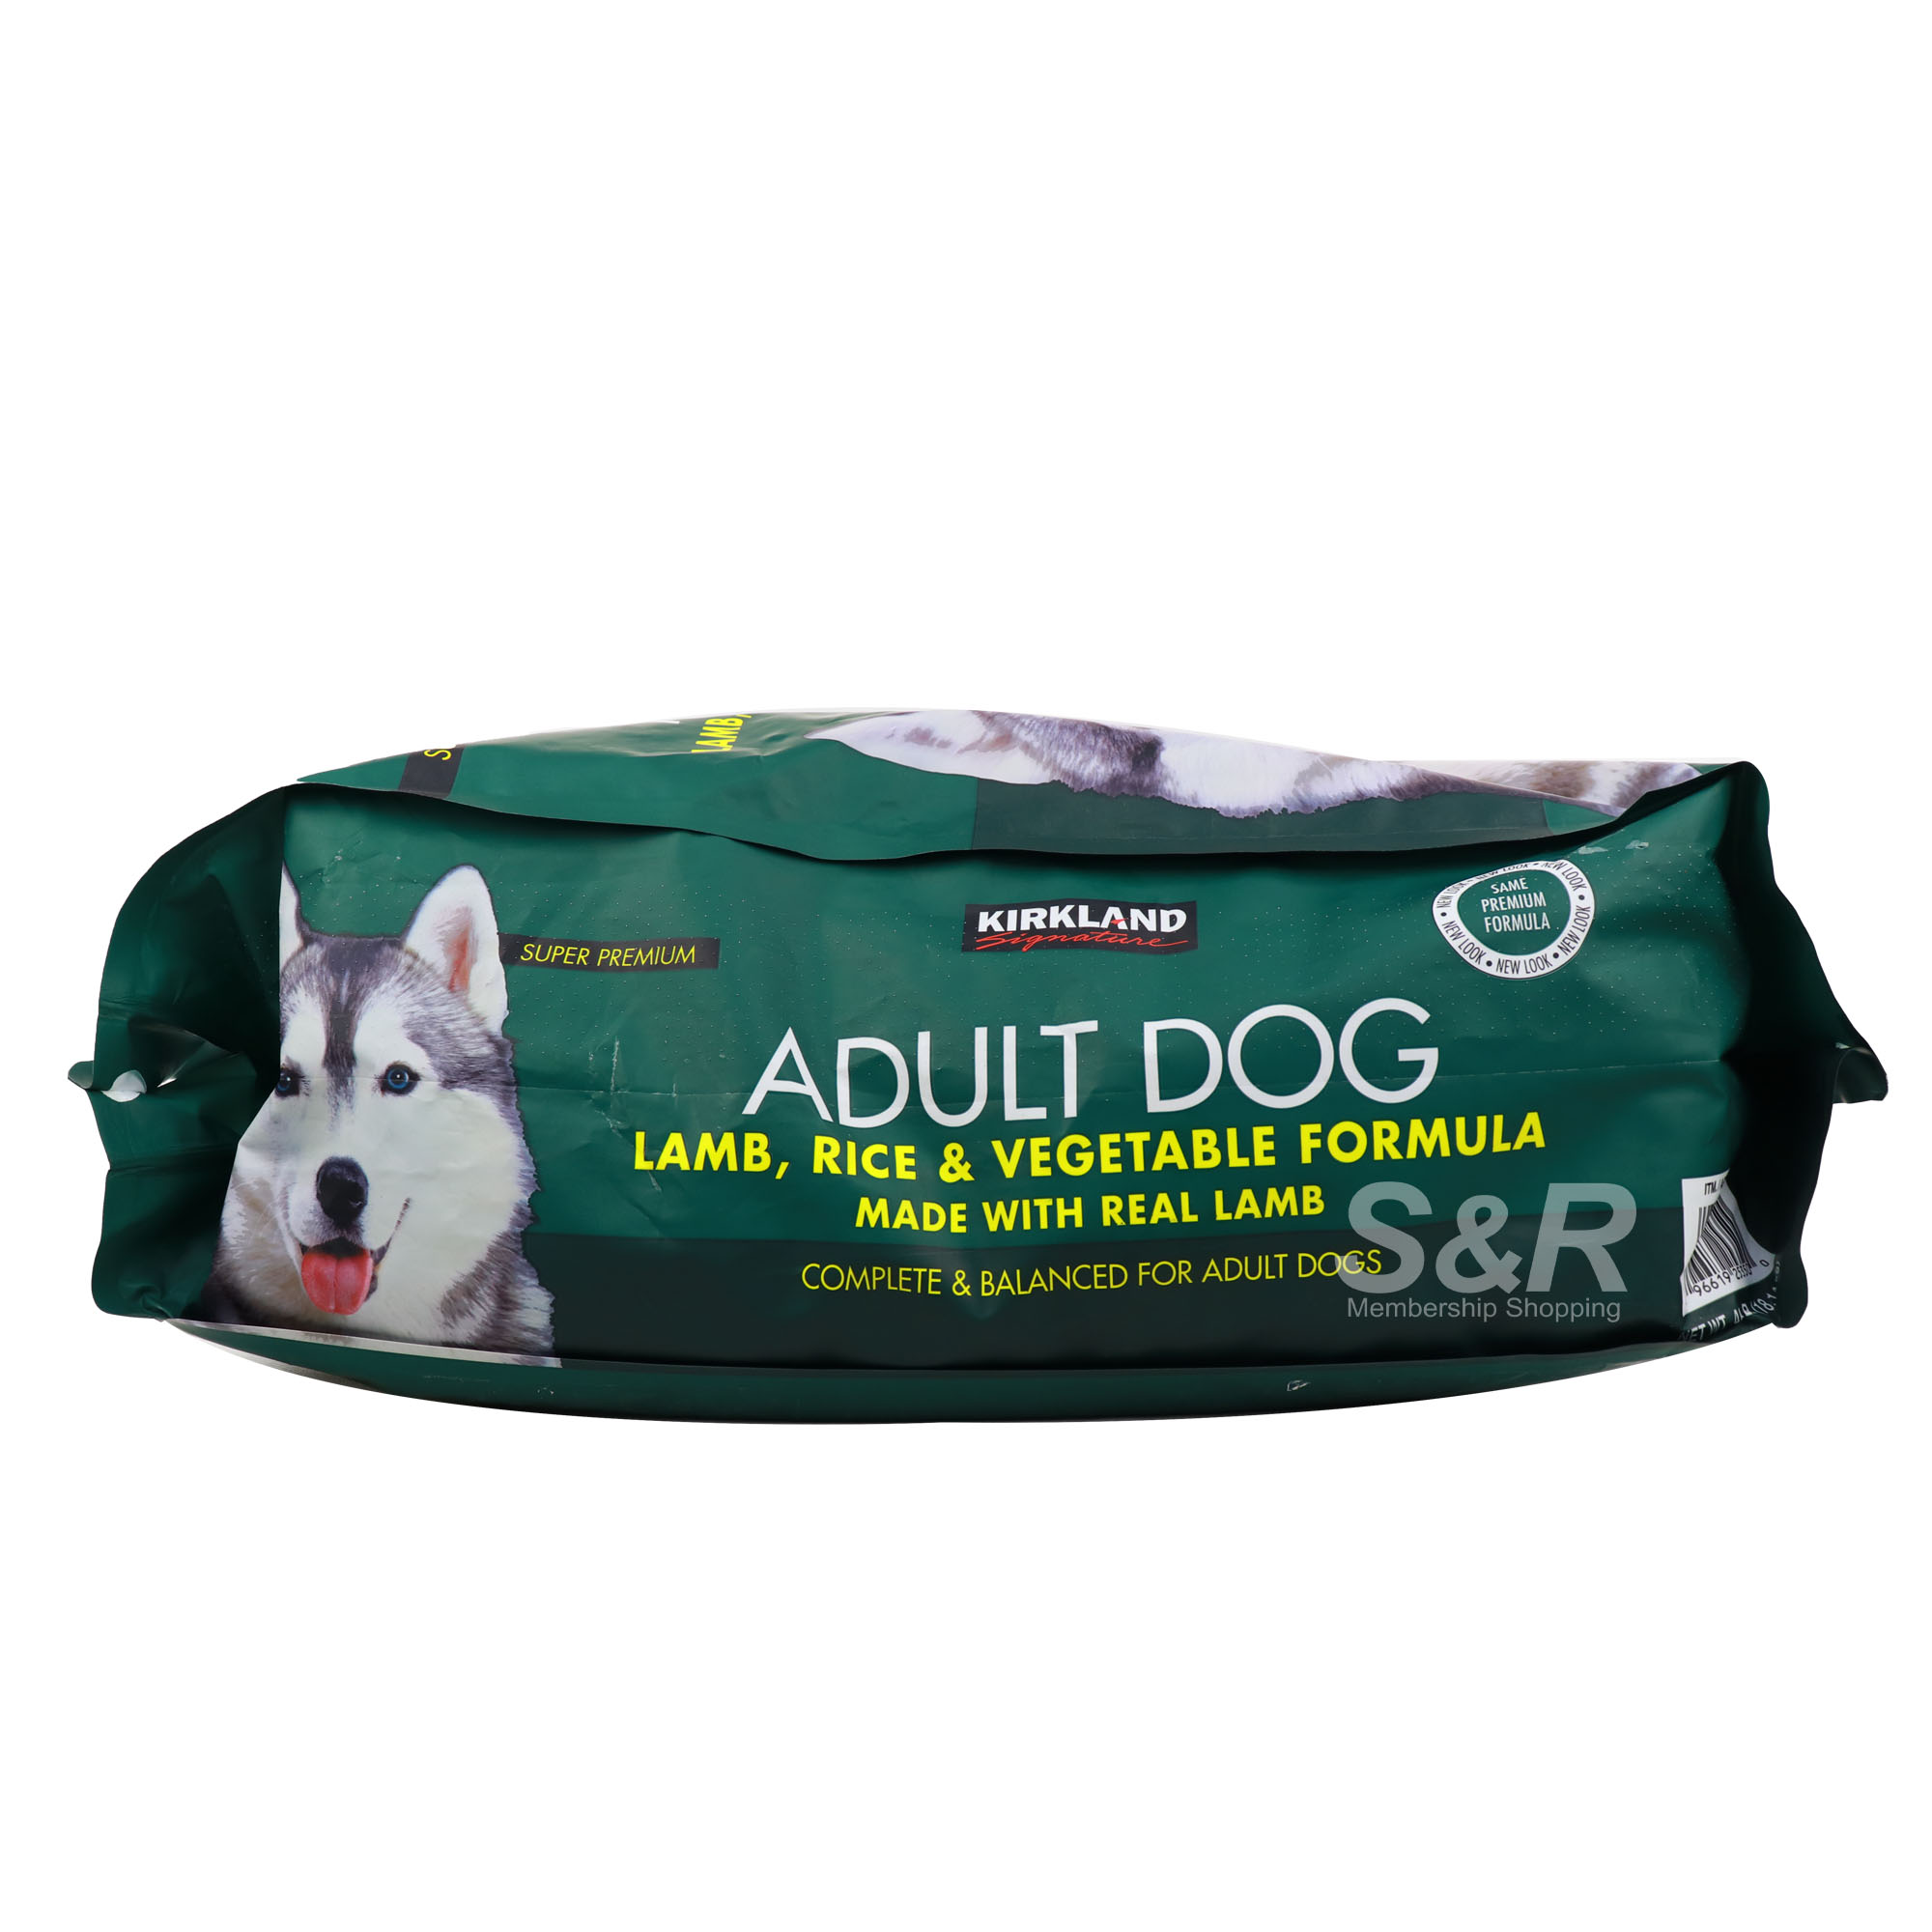 Adult Dog Lamb, Rice, & Vegetable Formula